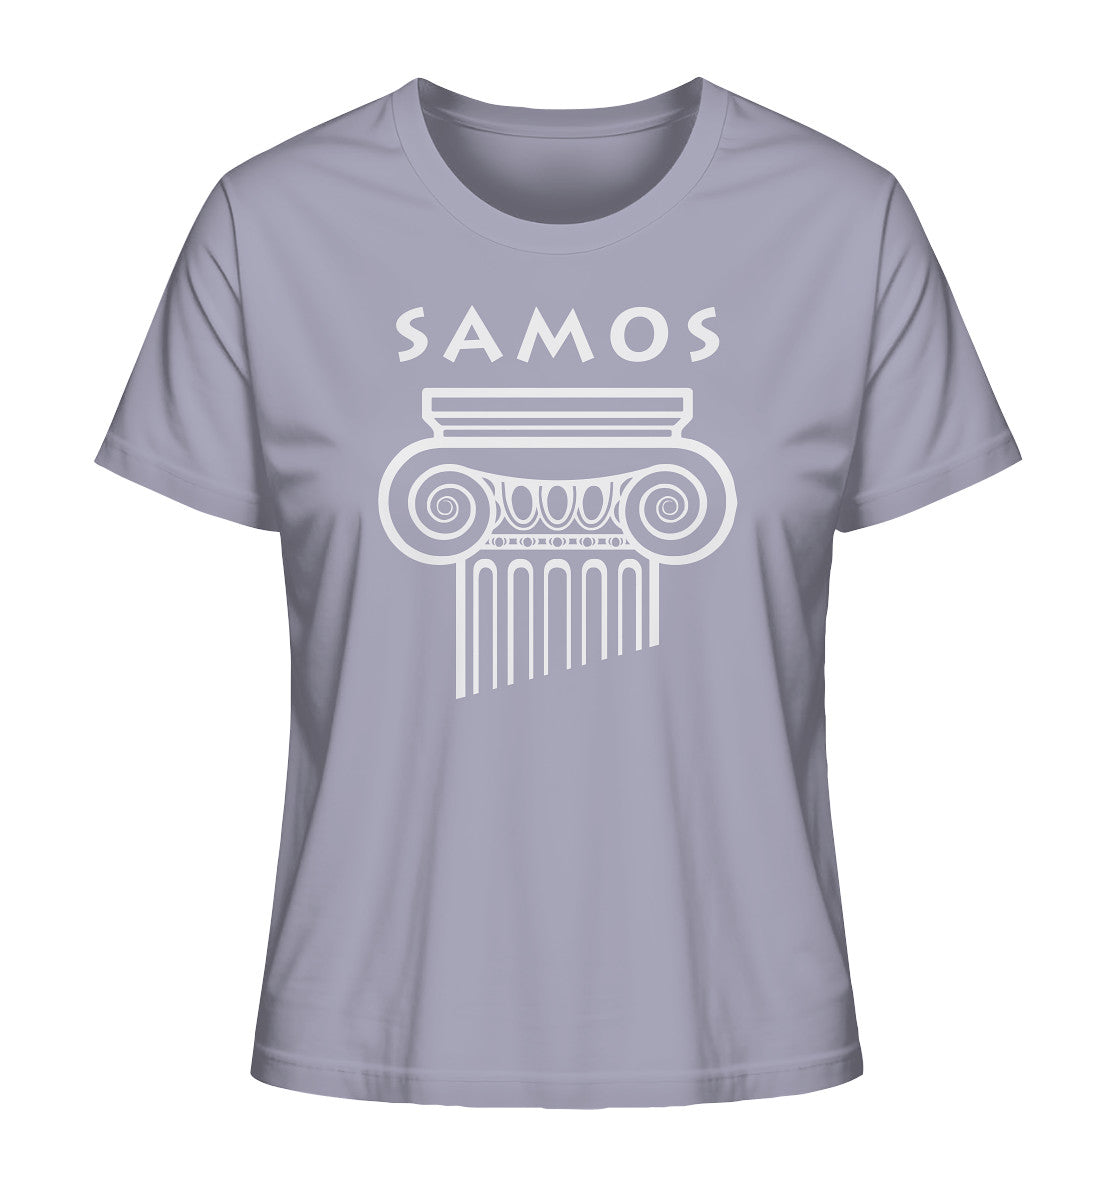 Samos Griechischer Säulenkopf - Ladies Organic Shirt